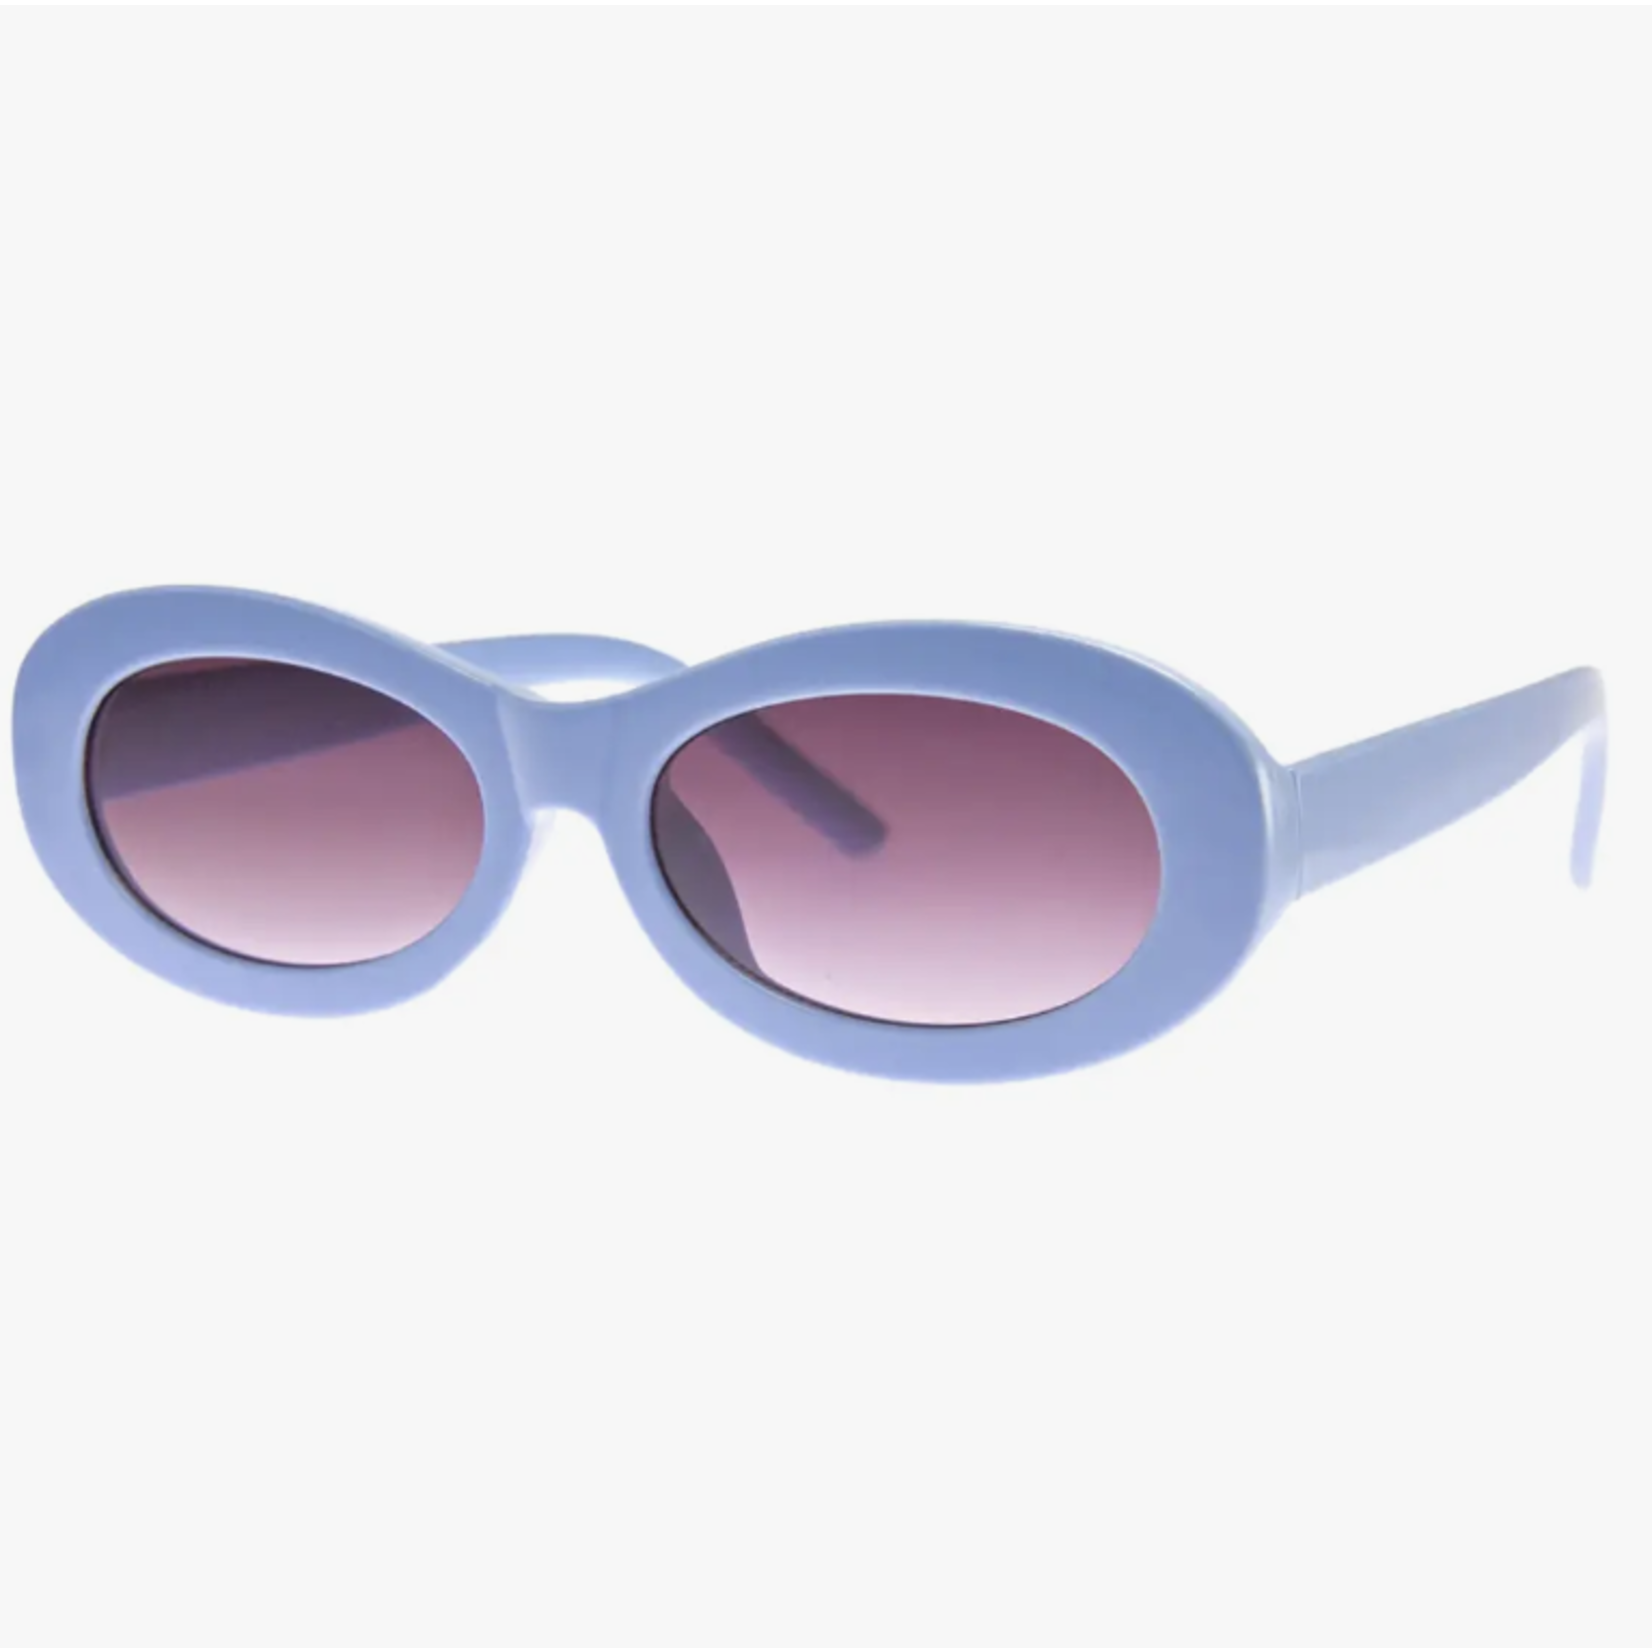 AJ Morgan 77 SUNSET STRIP Sunglasses -PERIWINKLE BLUE